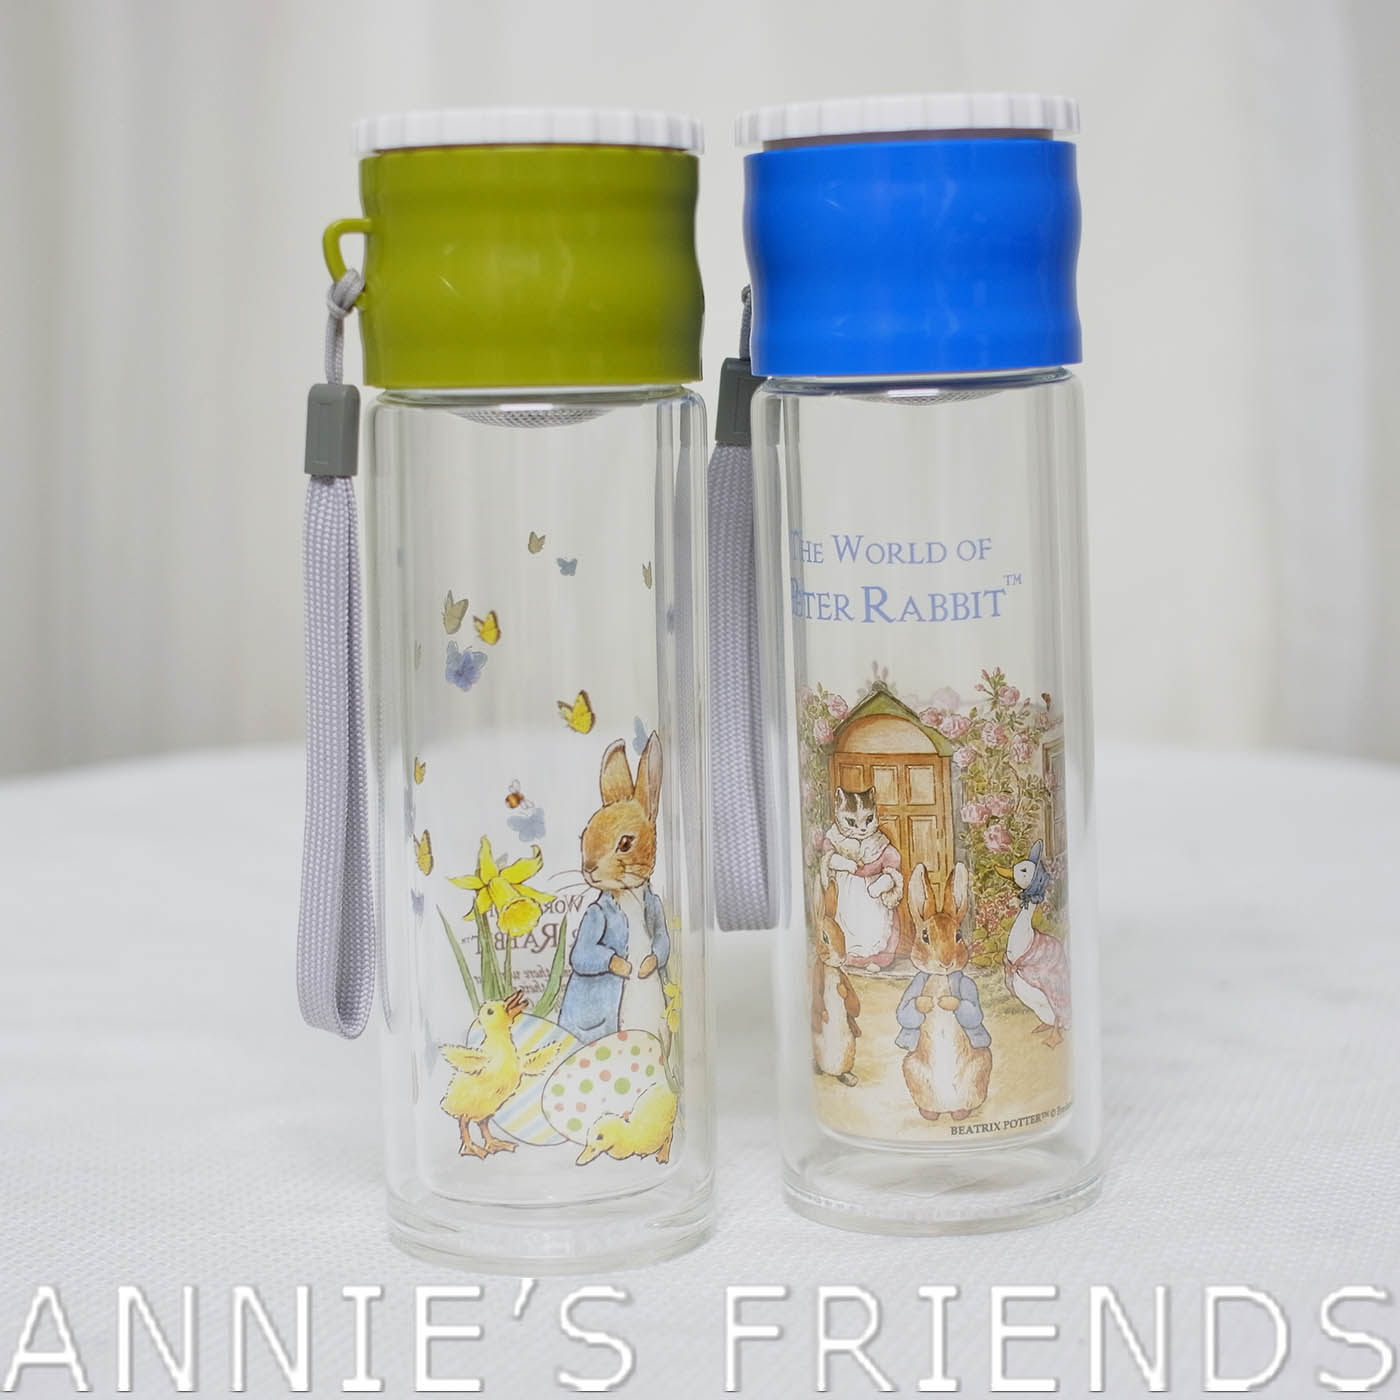 Annie’s Friends 彼得兔 Peter Rabbit 雙層 玻璃 茶水分離 隨身瓶 透明水瓶 生日禮物 禮品 經典世界